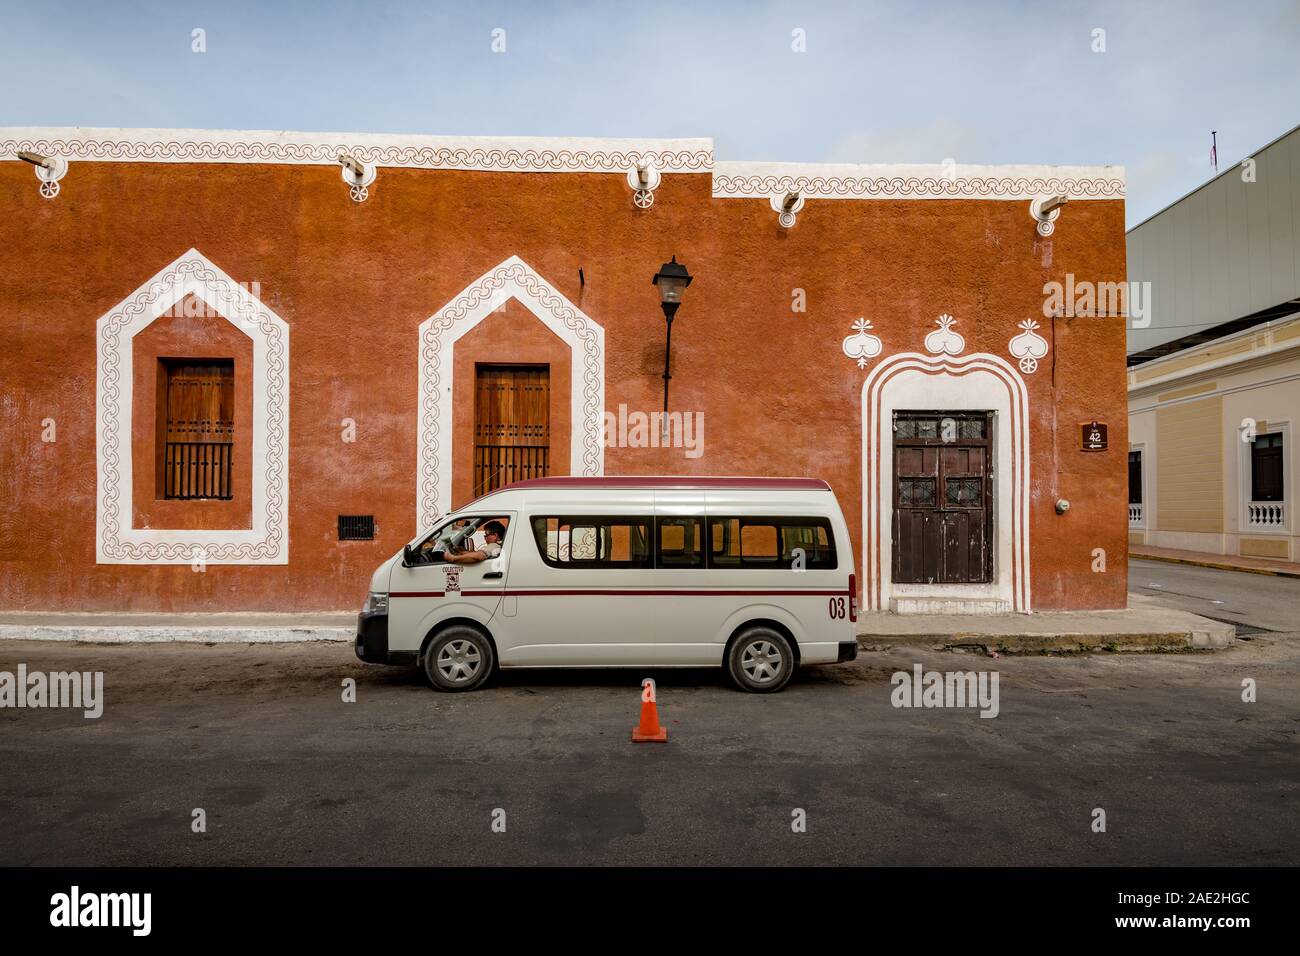 A toursit mini bus / taxi on a Colonial street Valladolid, Yucatan, Mexico Stock Photo